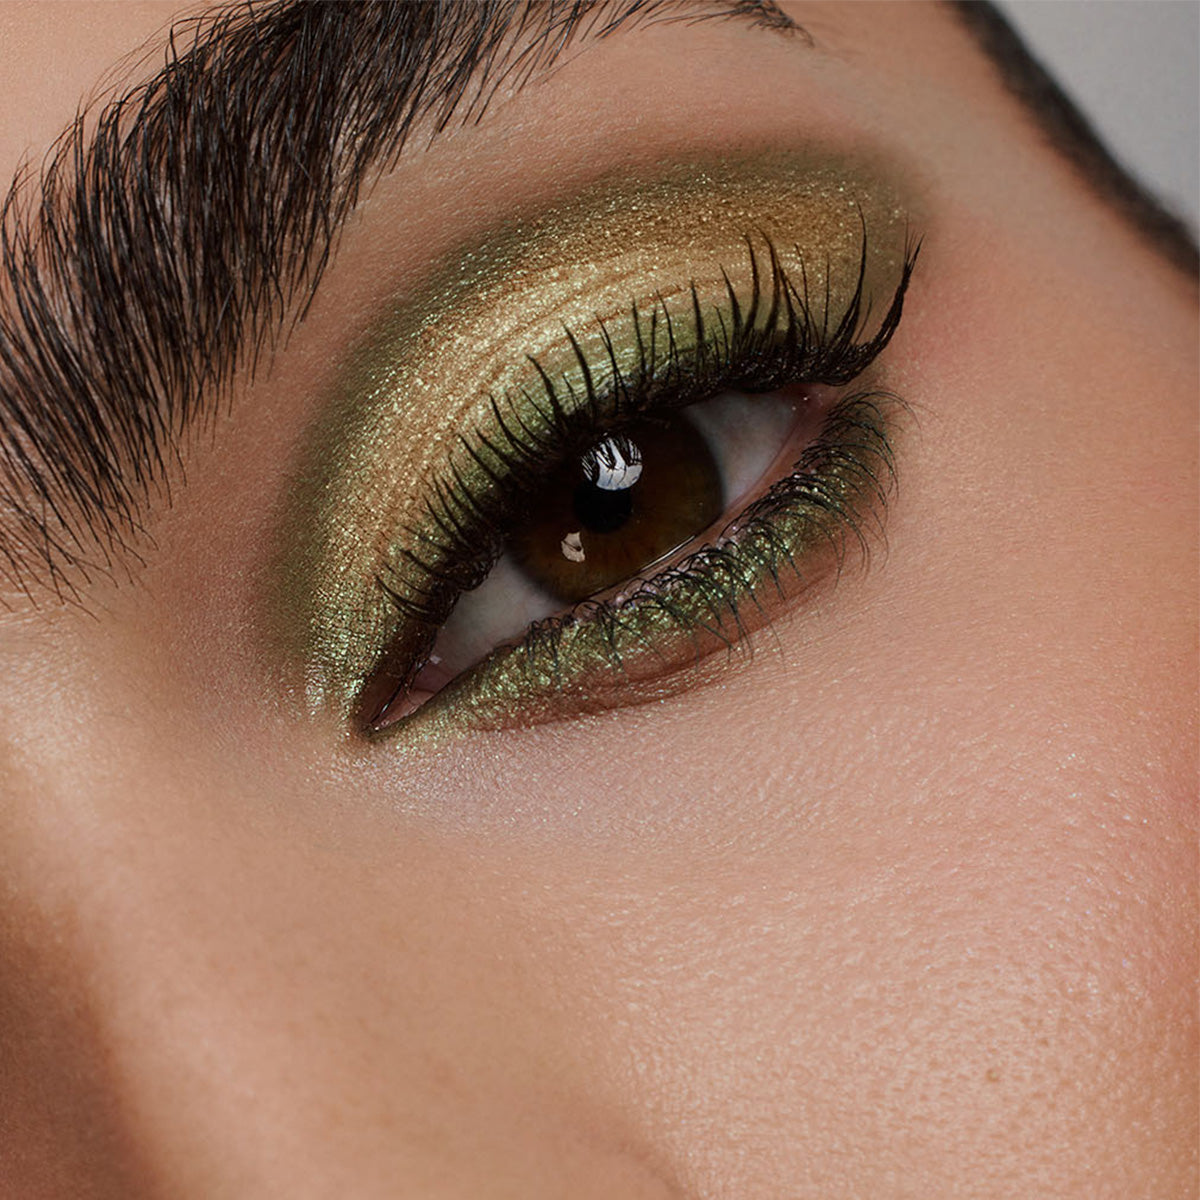 MESMER EYES - KHAKI GREEN CREAM WITH GLISTENING GREEN-GOLD SHADOW - Khaki green cream with green-gold shimmer powder in unique double-decker eyeshadow on model